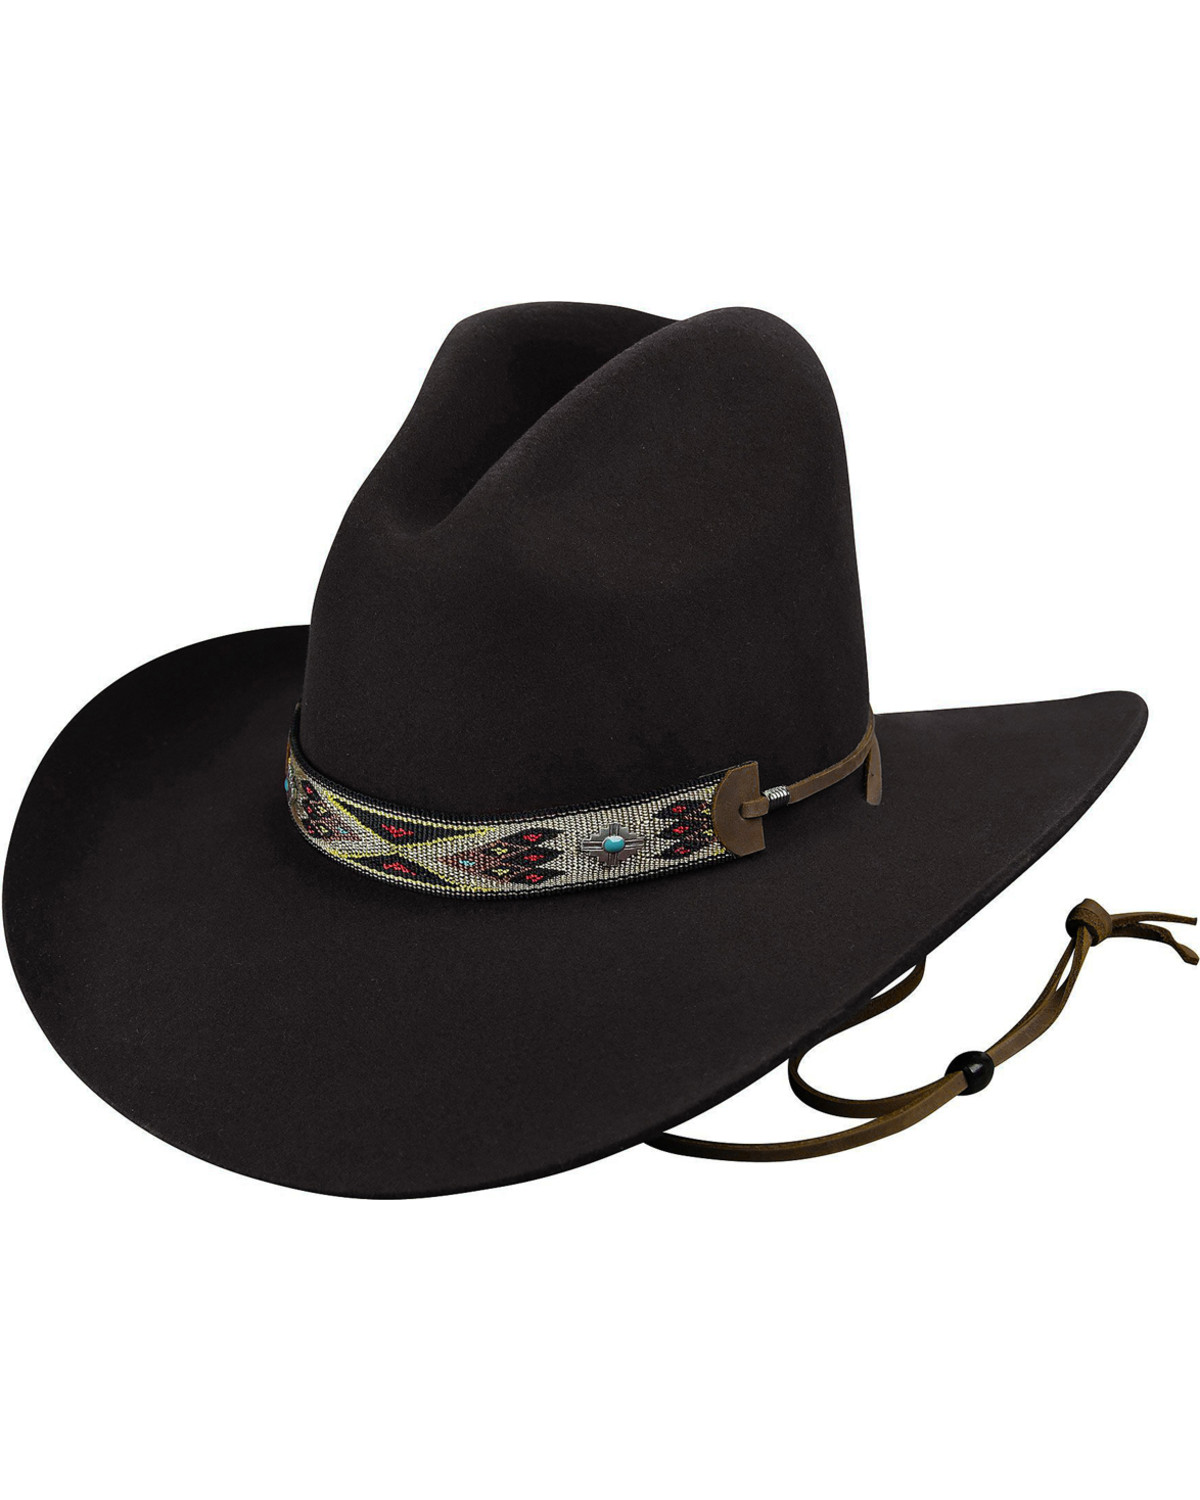 Bailey Renegade Hickstead Felt Western Fashion Hat